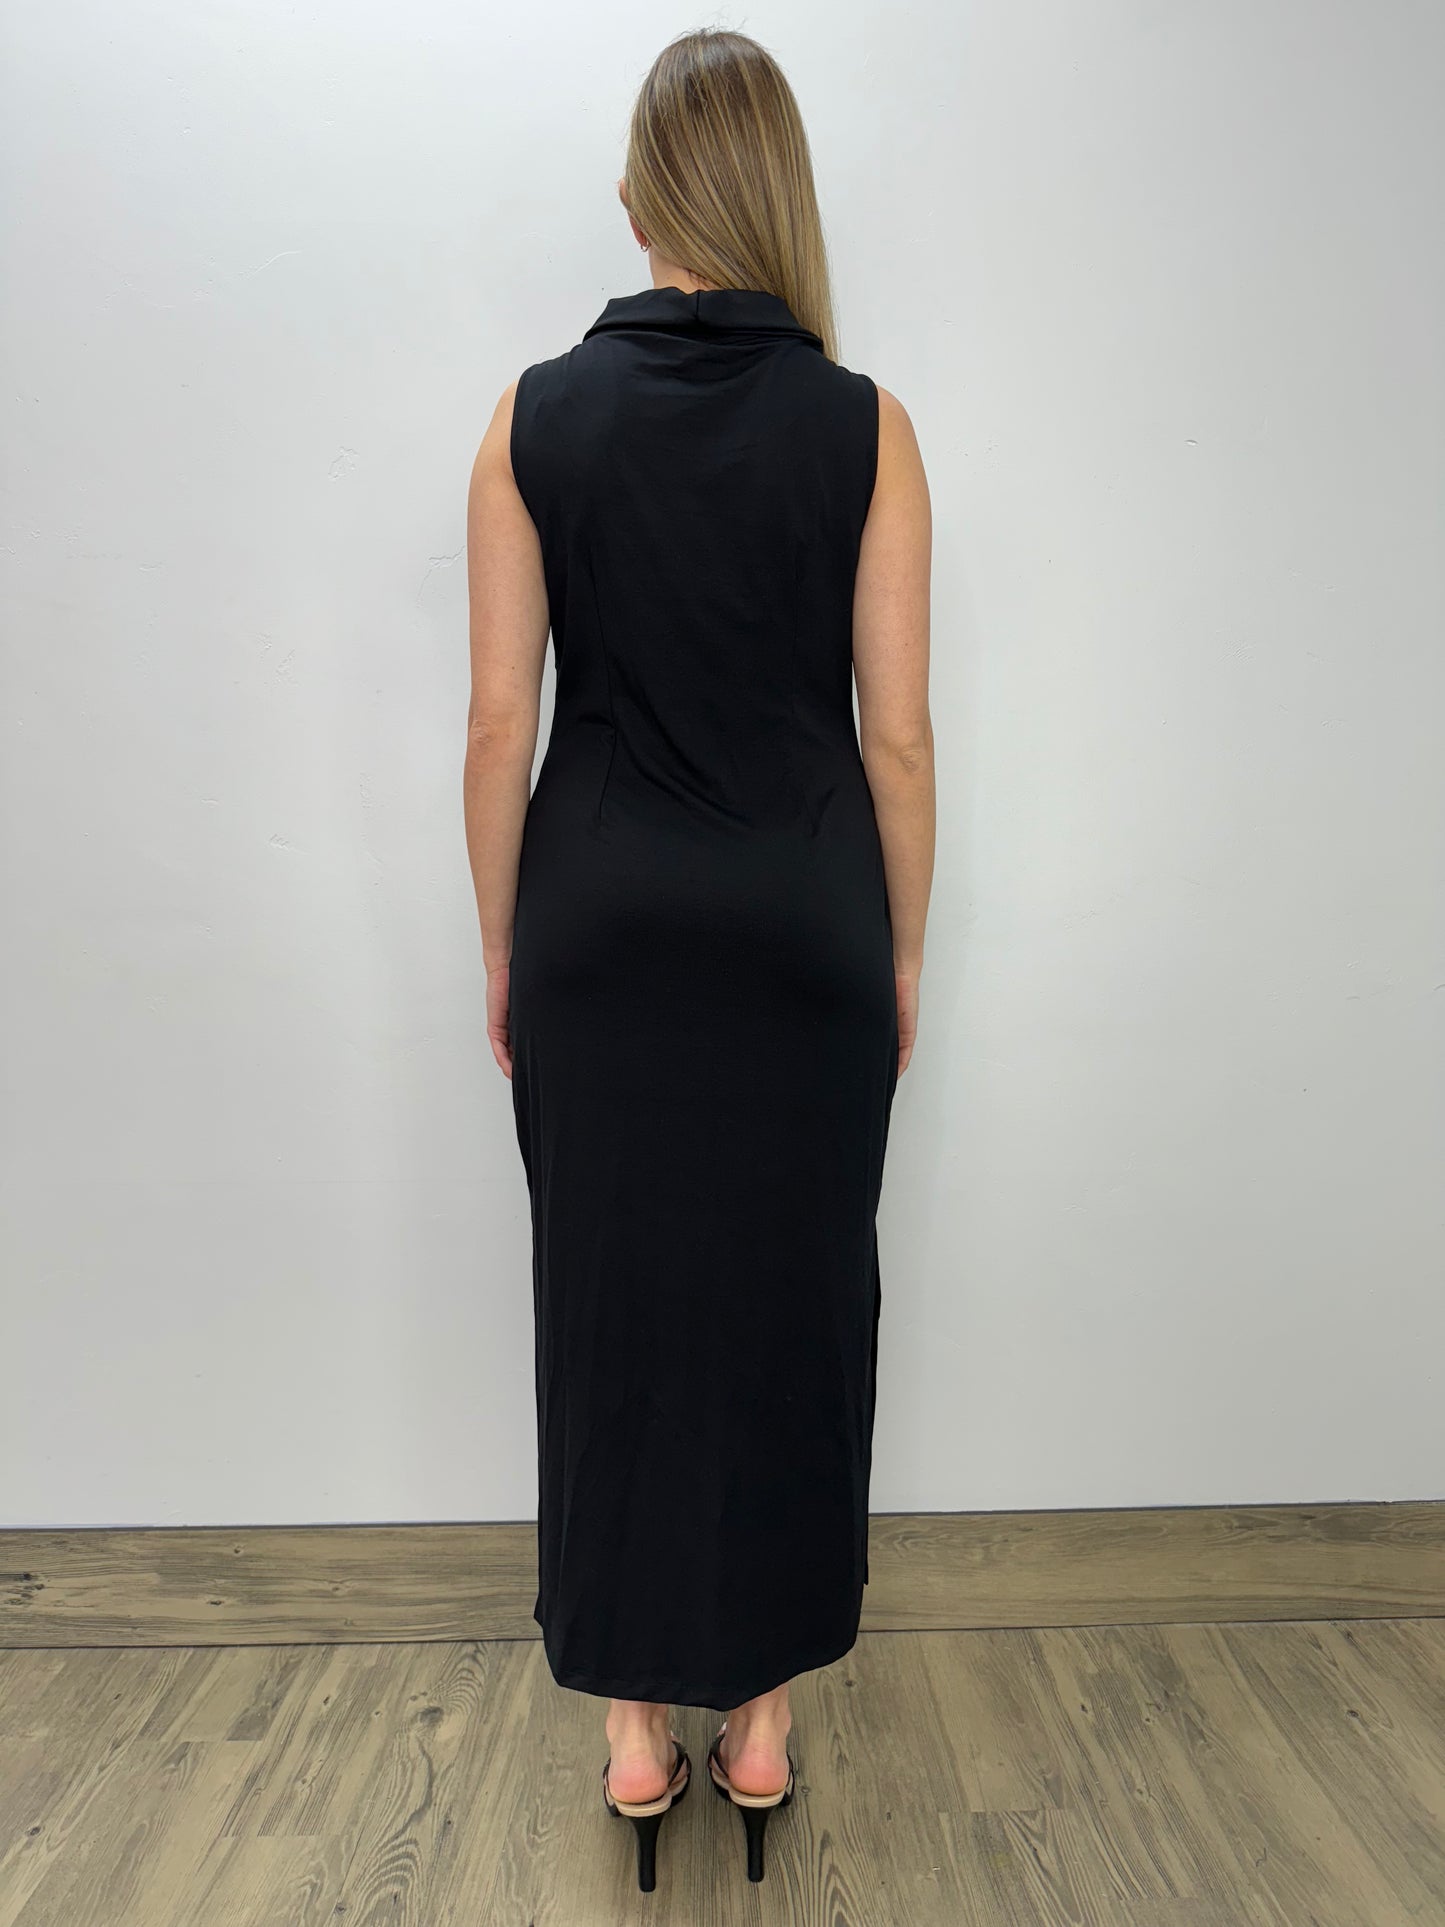 Long Black Sleeveless Dress with Pockets